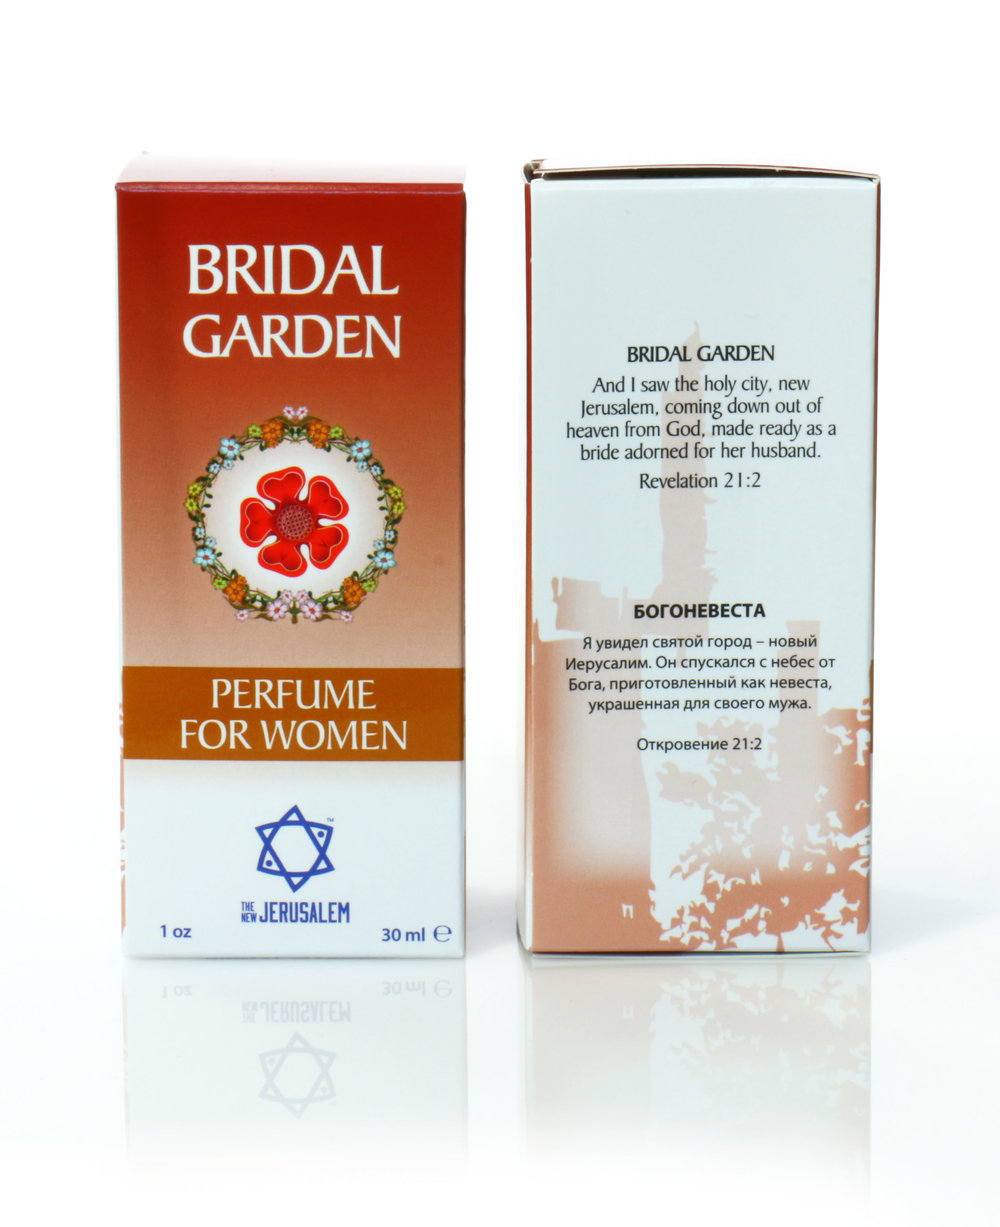 Bridal Garden — The New Jerusalem